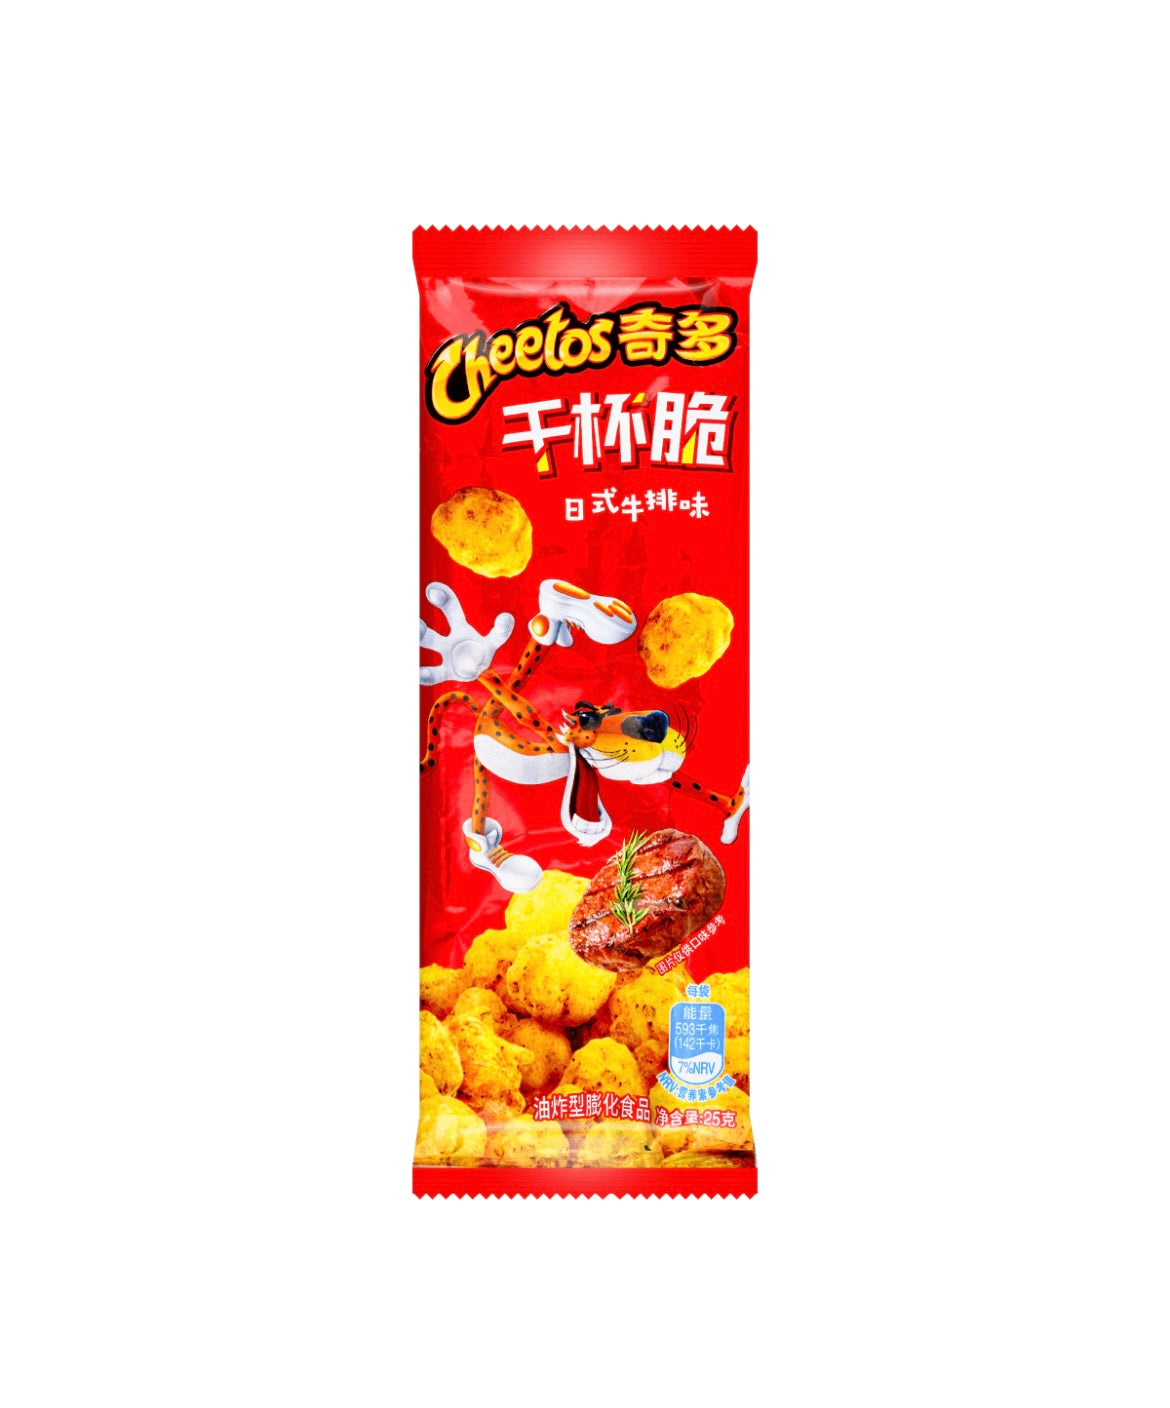 Cheetos Japanese Steak [Mini Bag] (China)